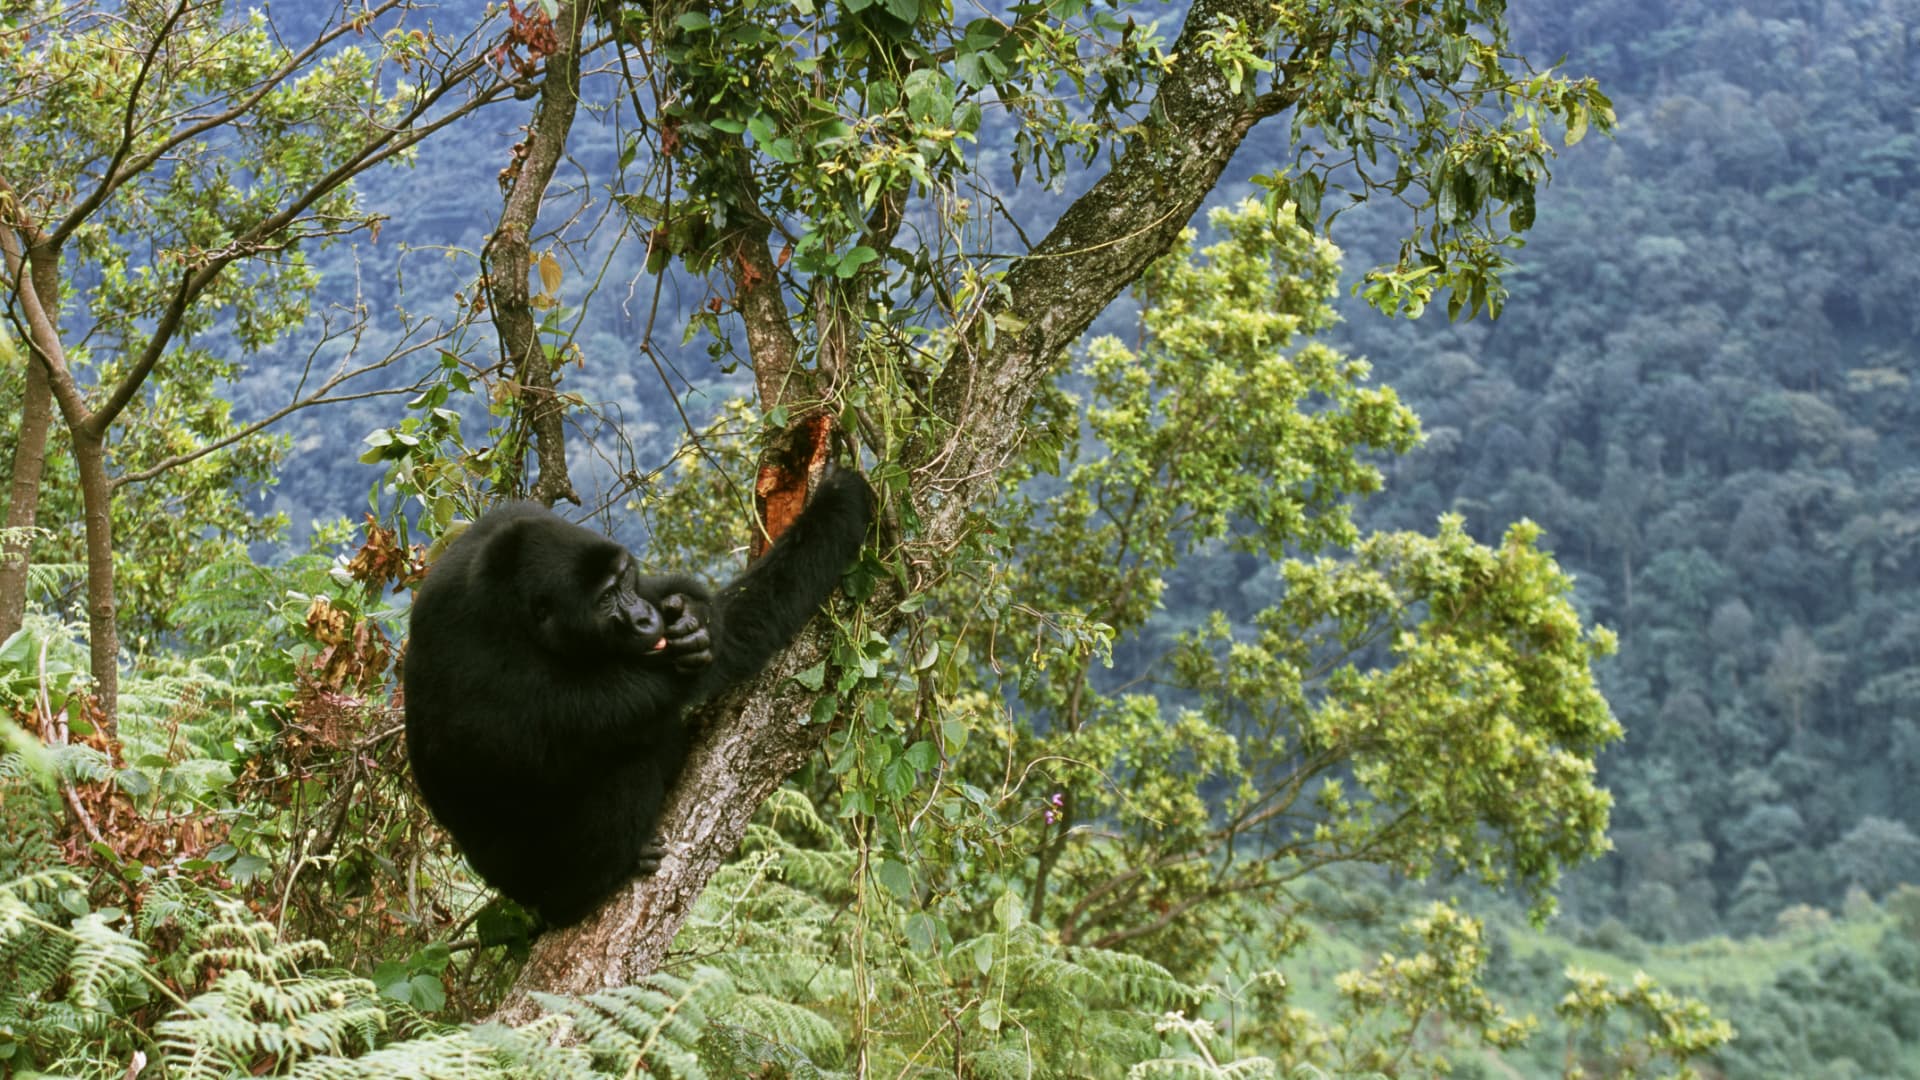 Around 1,000 mountain gorillas exist today, more than half which live in Uganda, according to the Uganda Wildlife Authority.